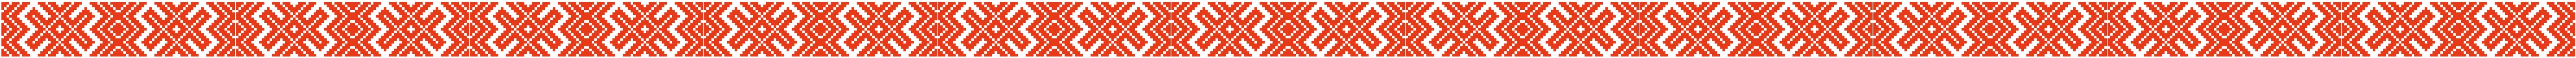 belorusskij-ornament-tradicionnye 1 5500d